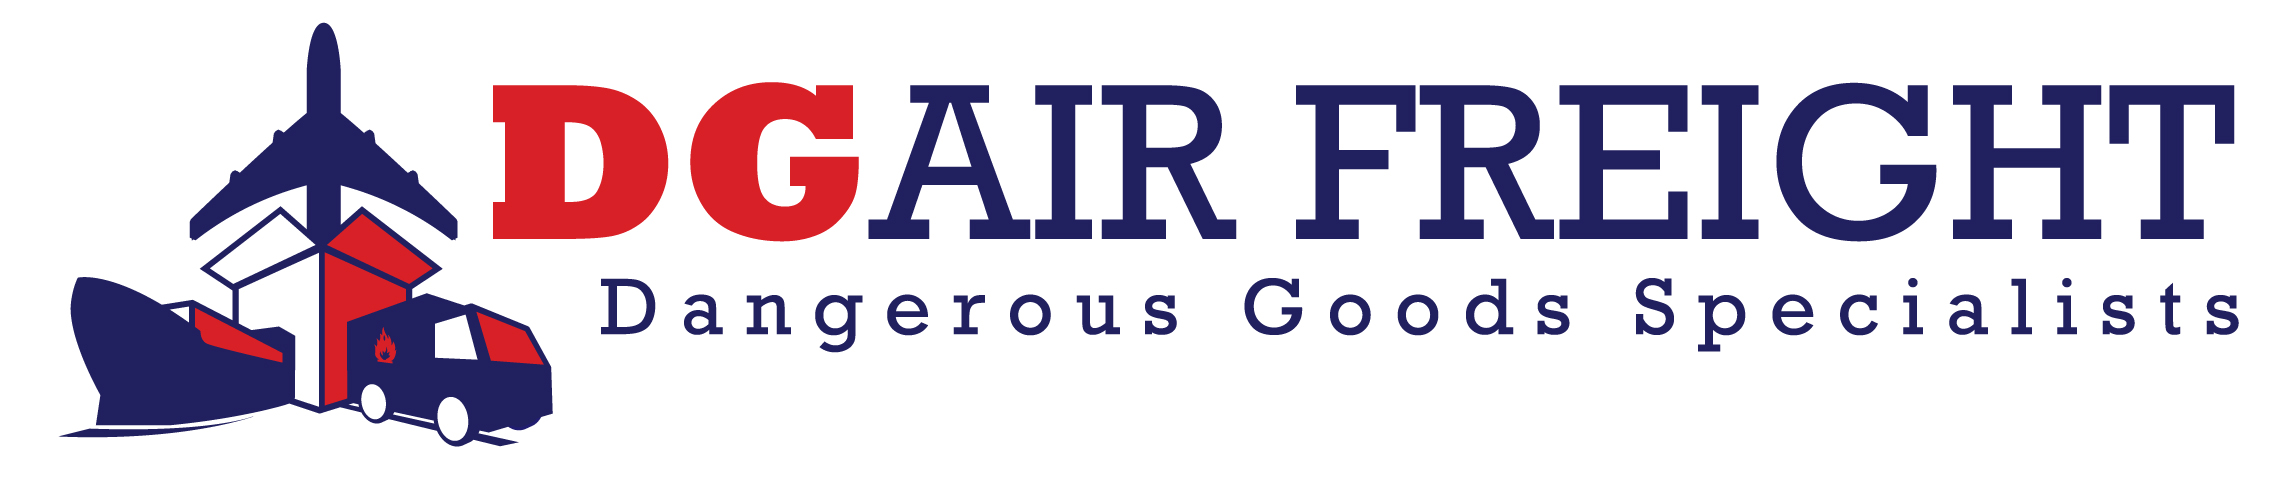 DG AIR Freight Logo Slider